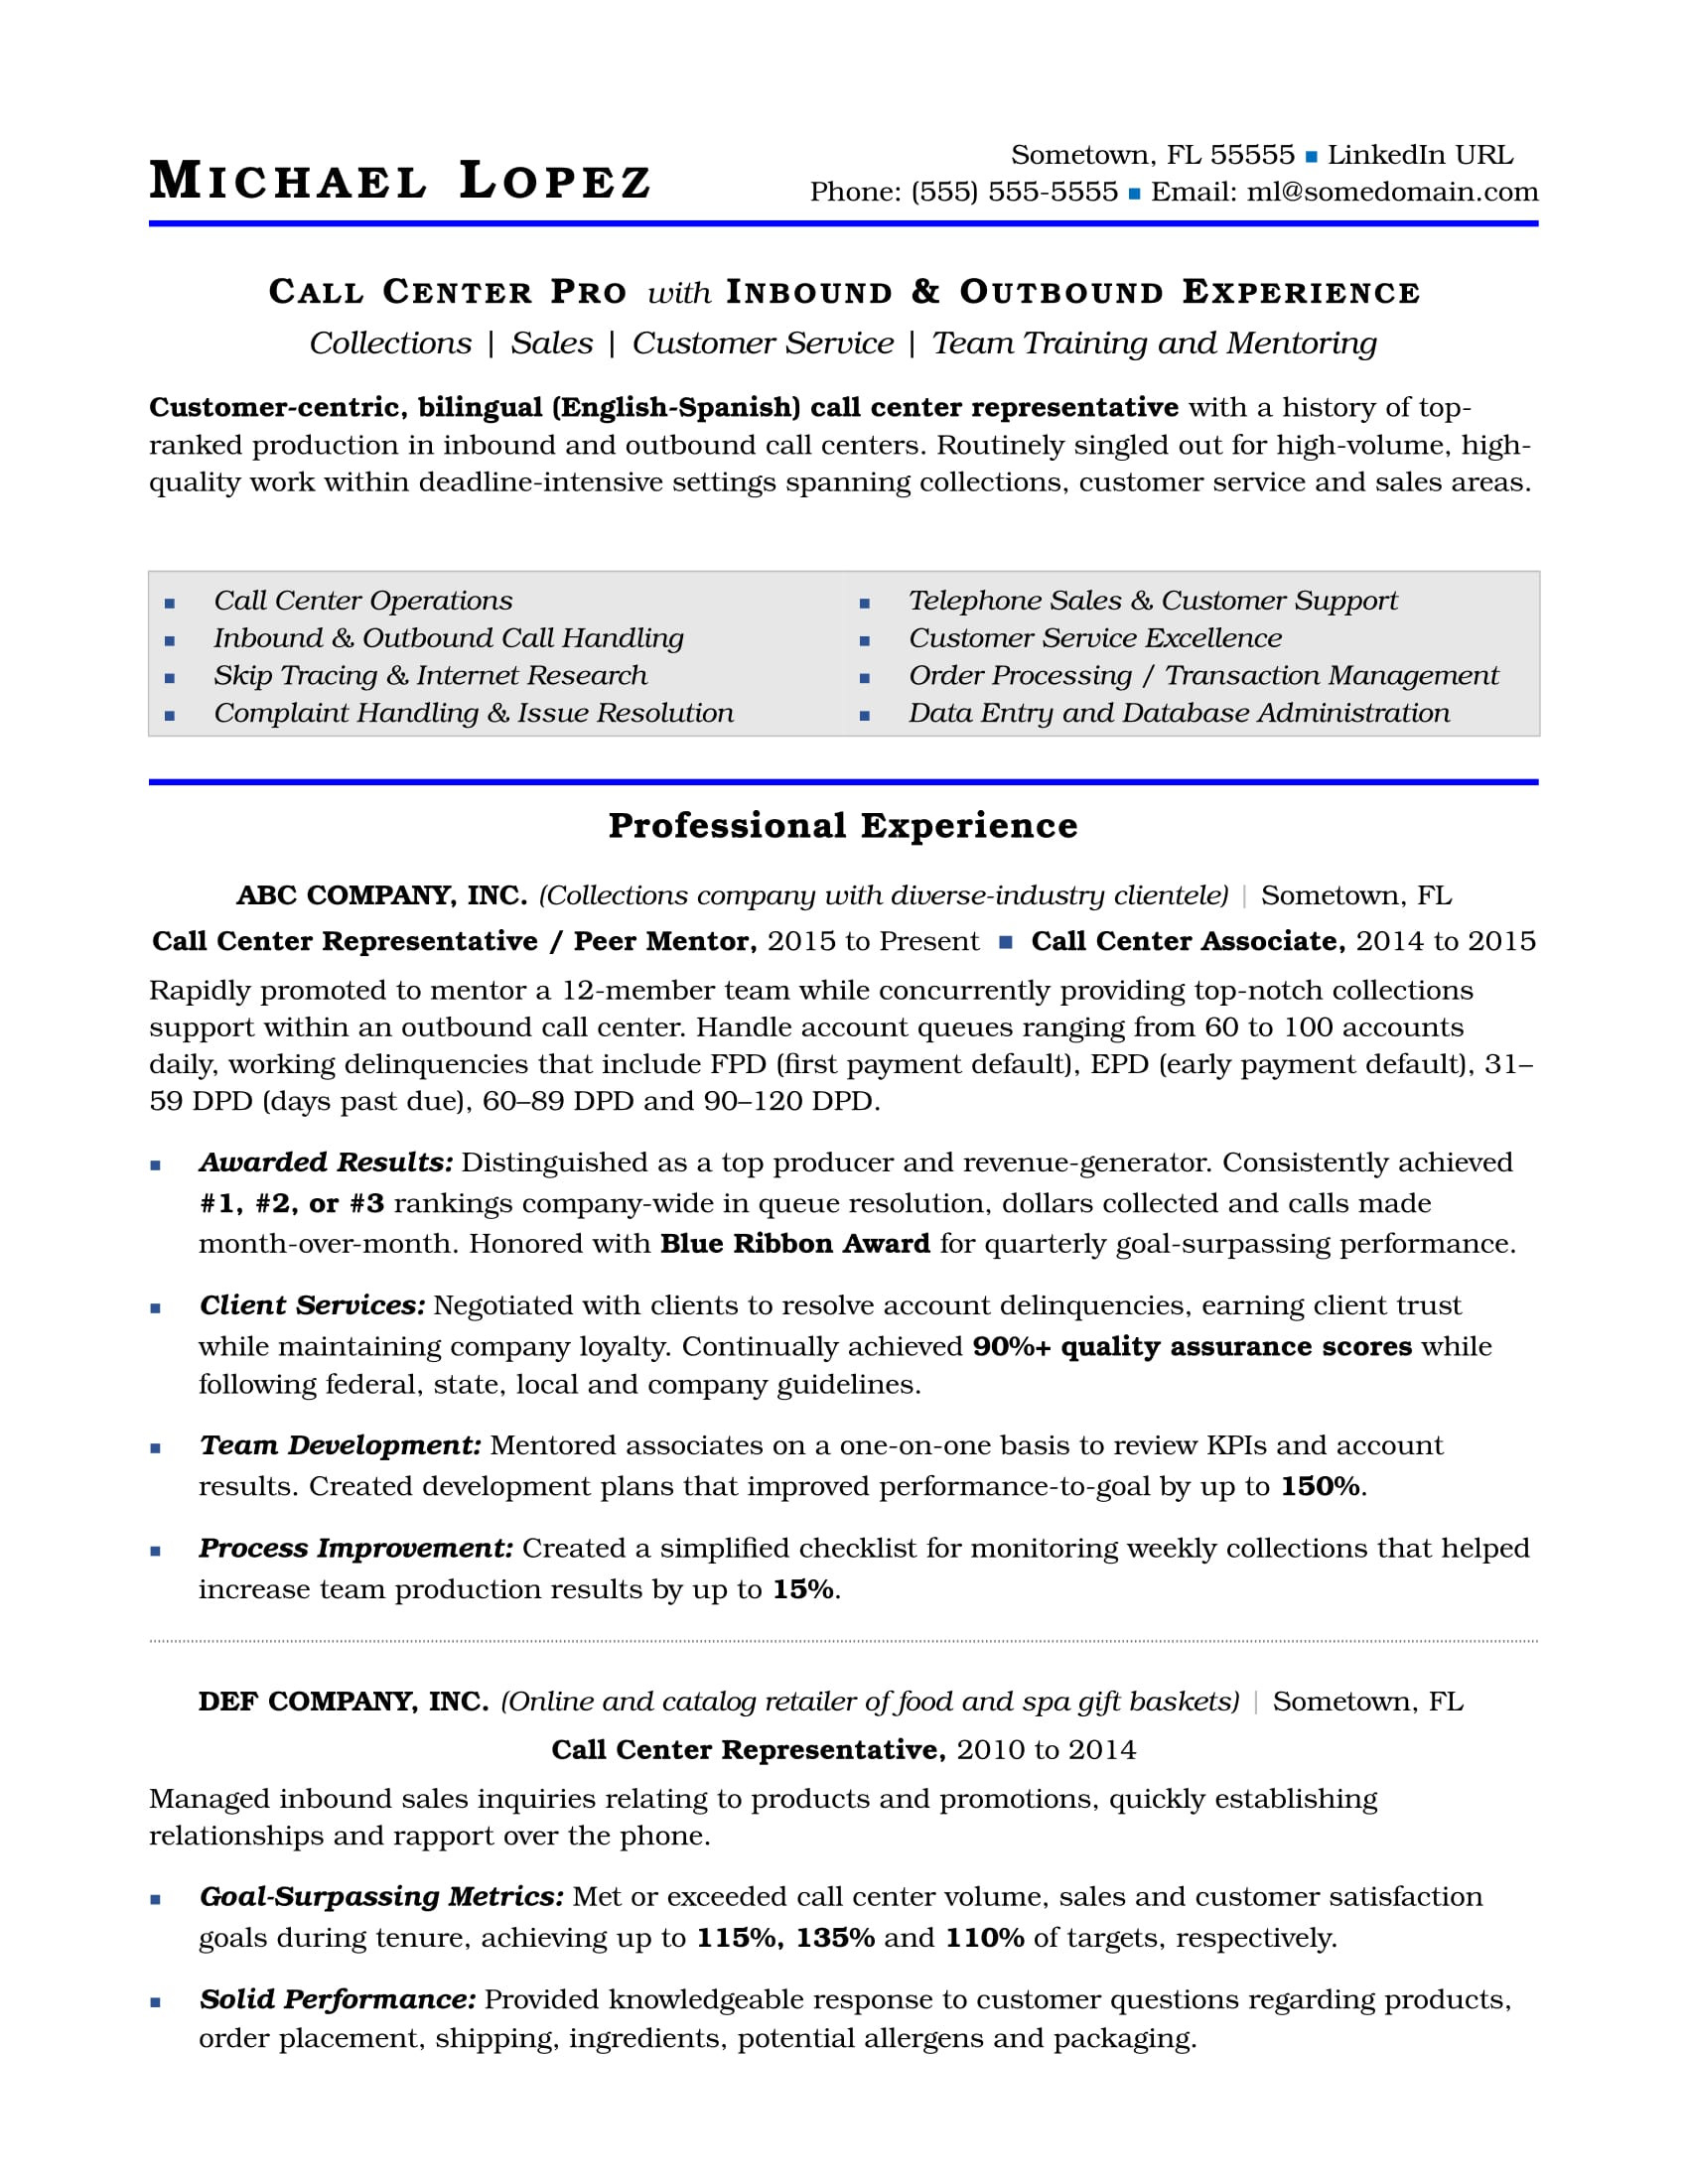 Sample Resume for Customer Care Representative Call Center Resume Sample Monster.com